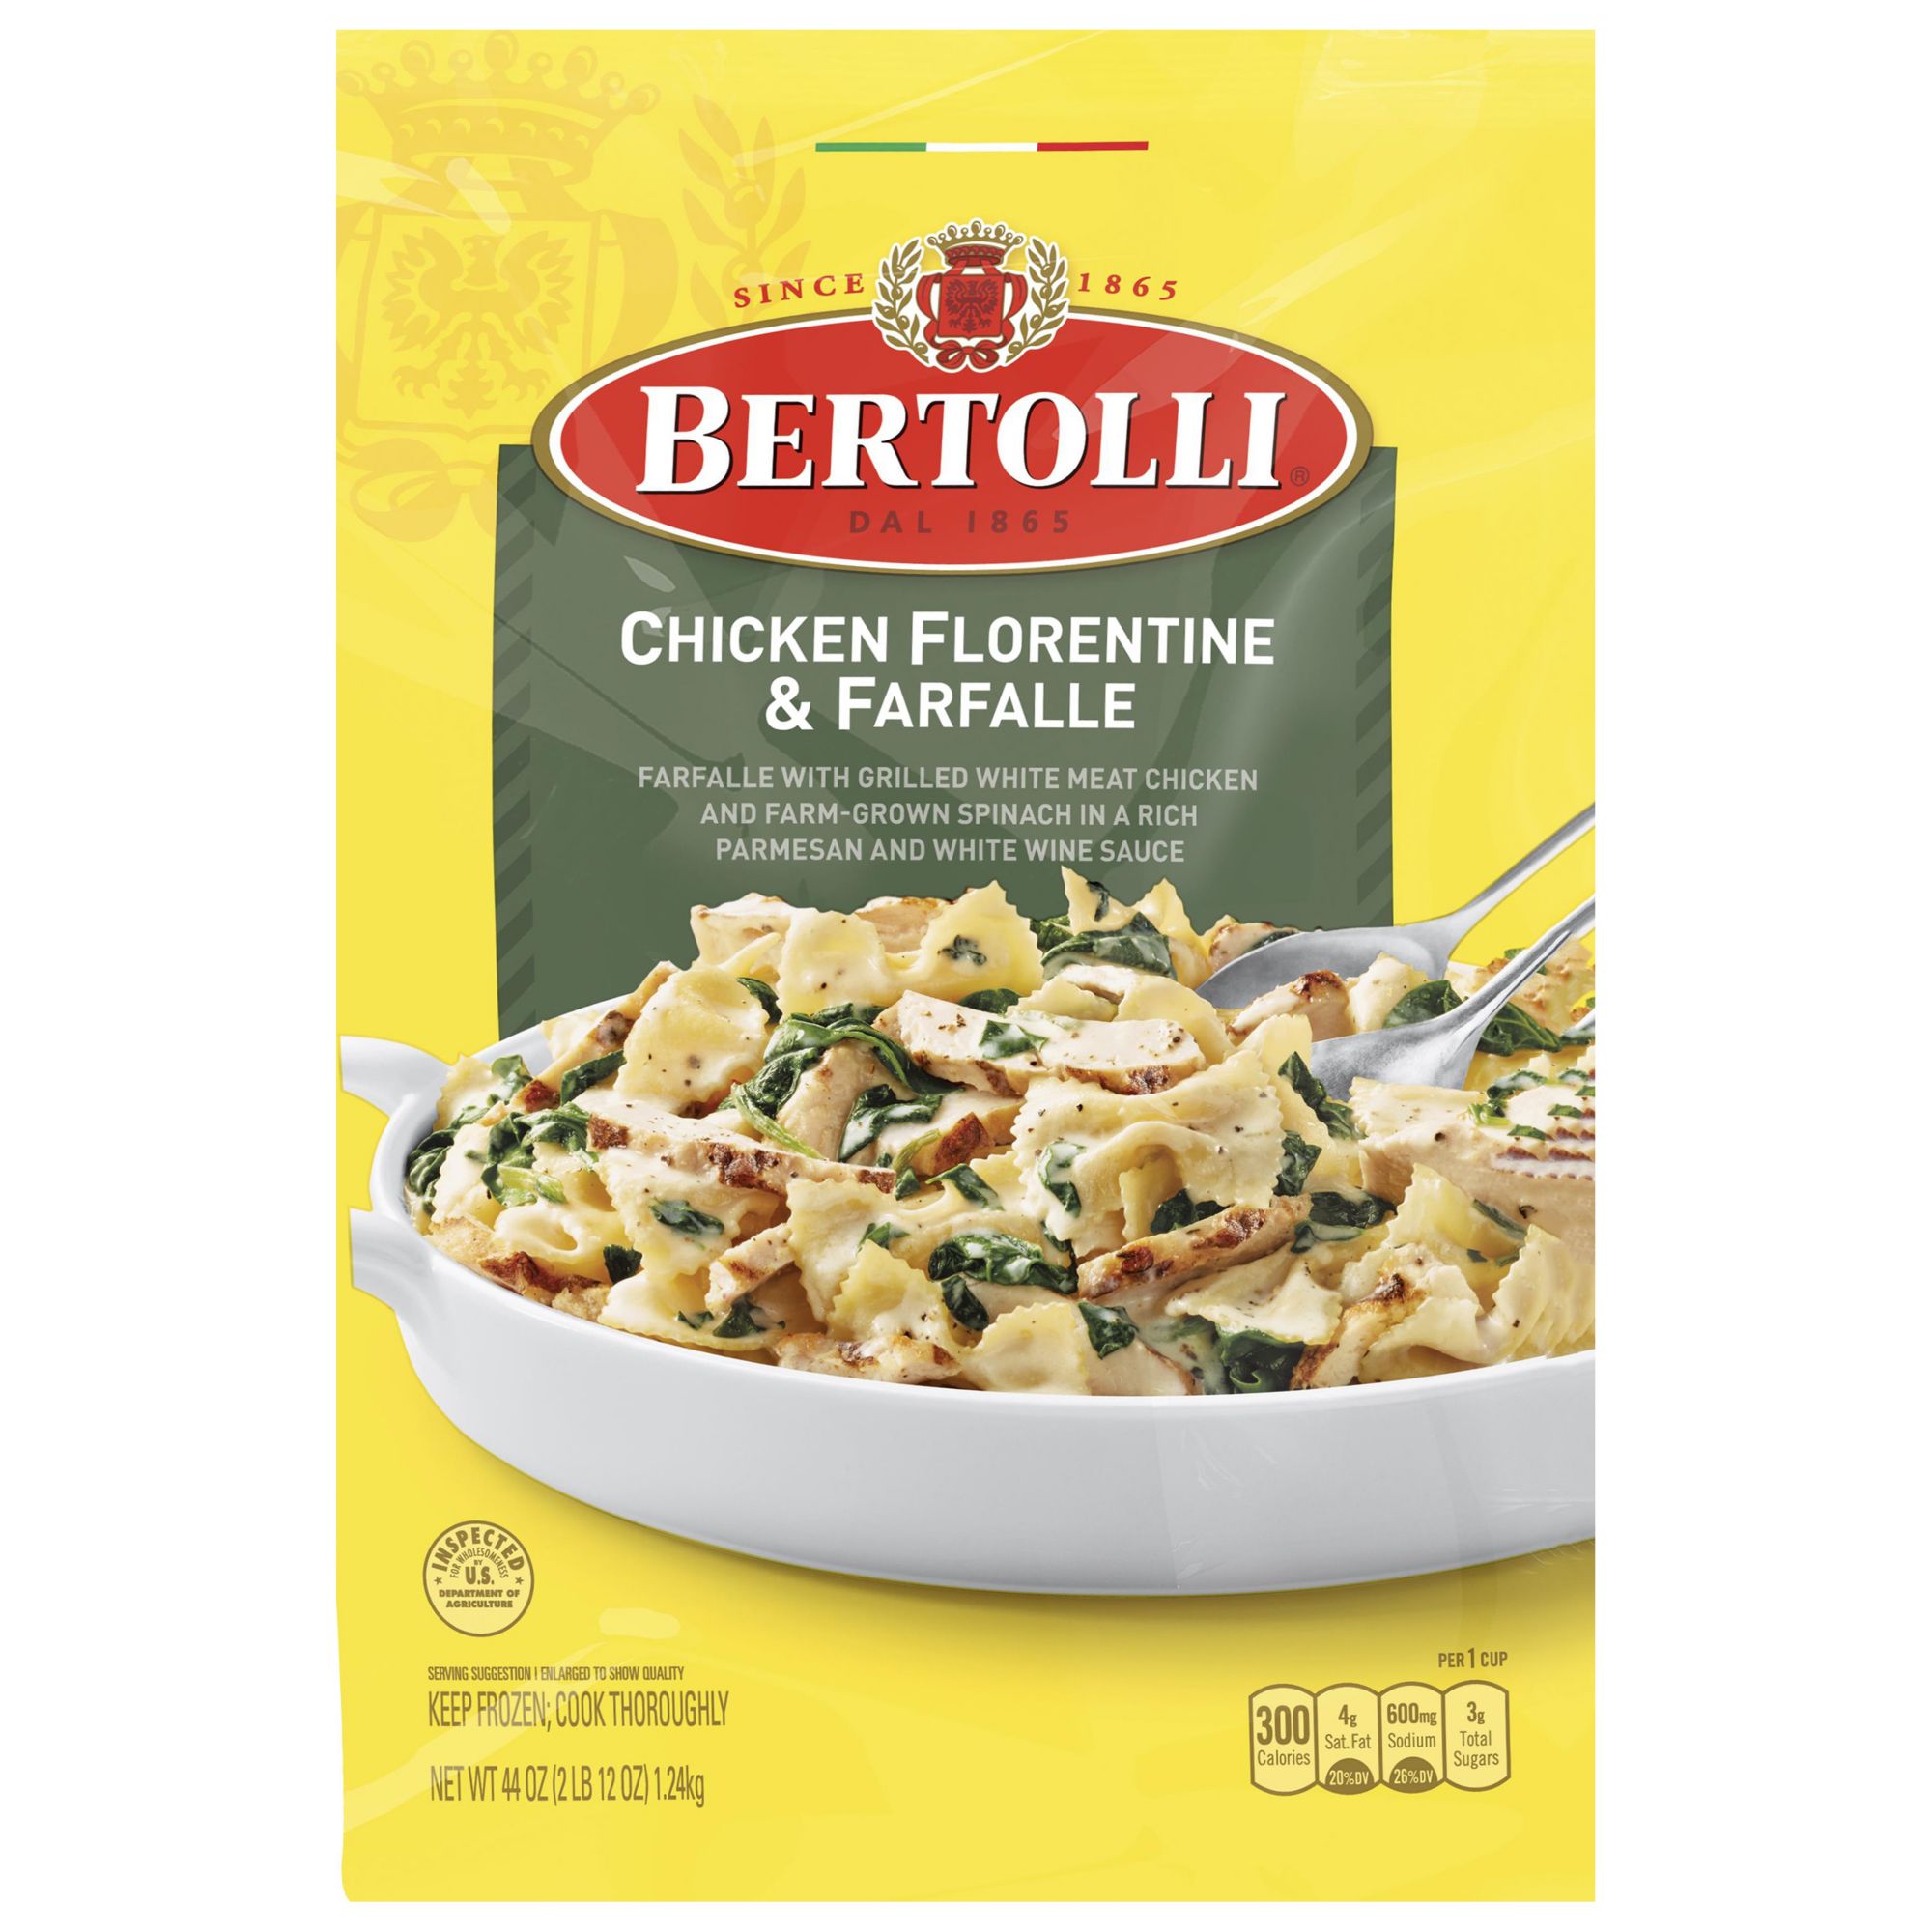 Bertolli Chicken Florentine and Farfalle Skillet Meal, 44 oz.